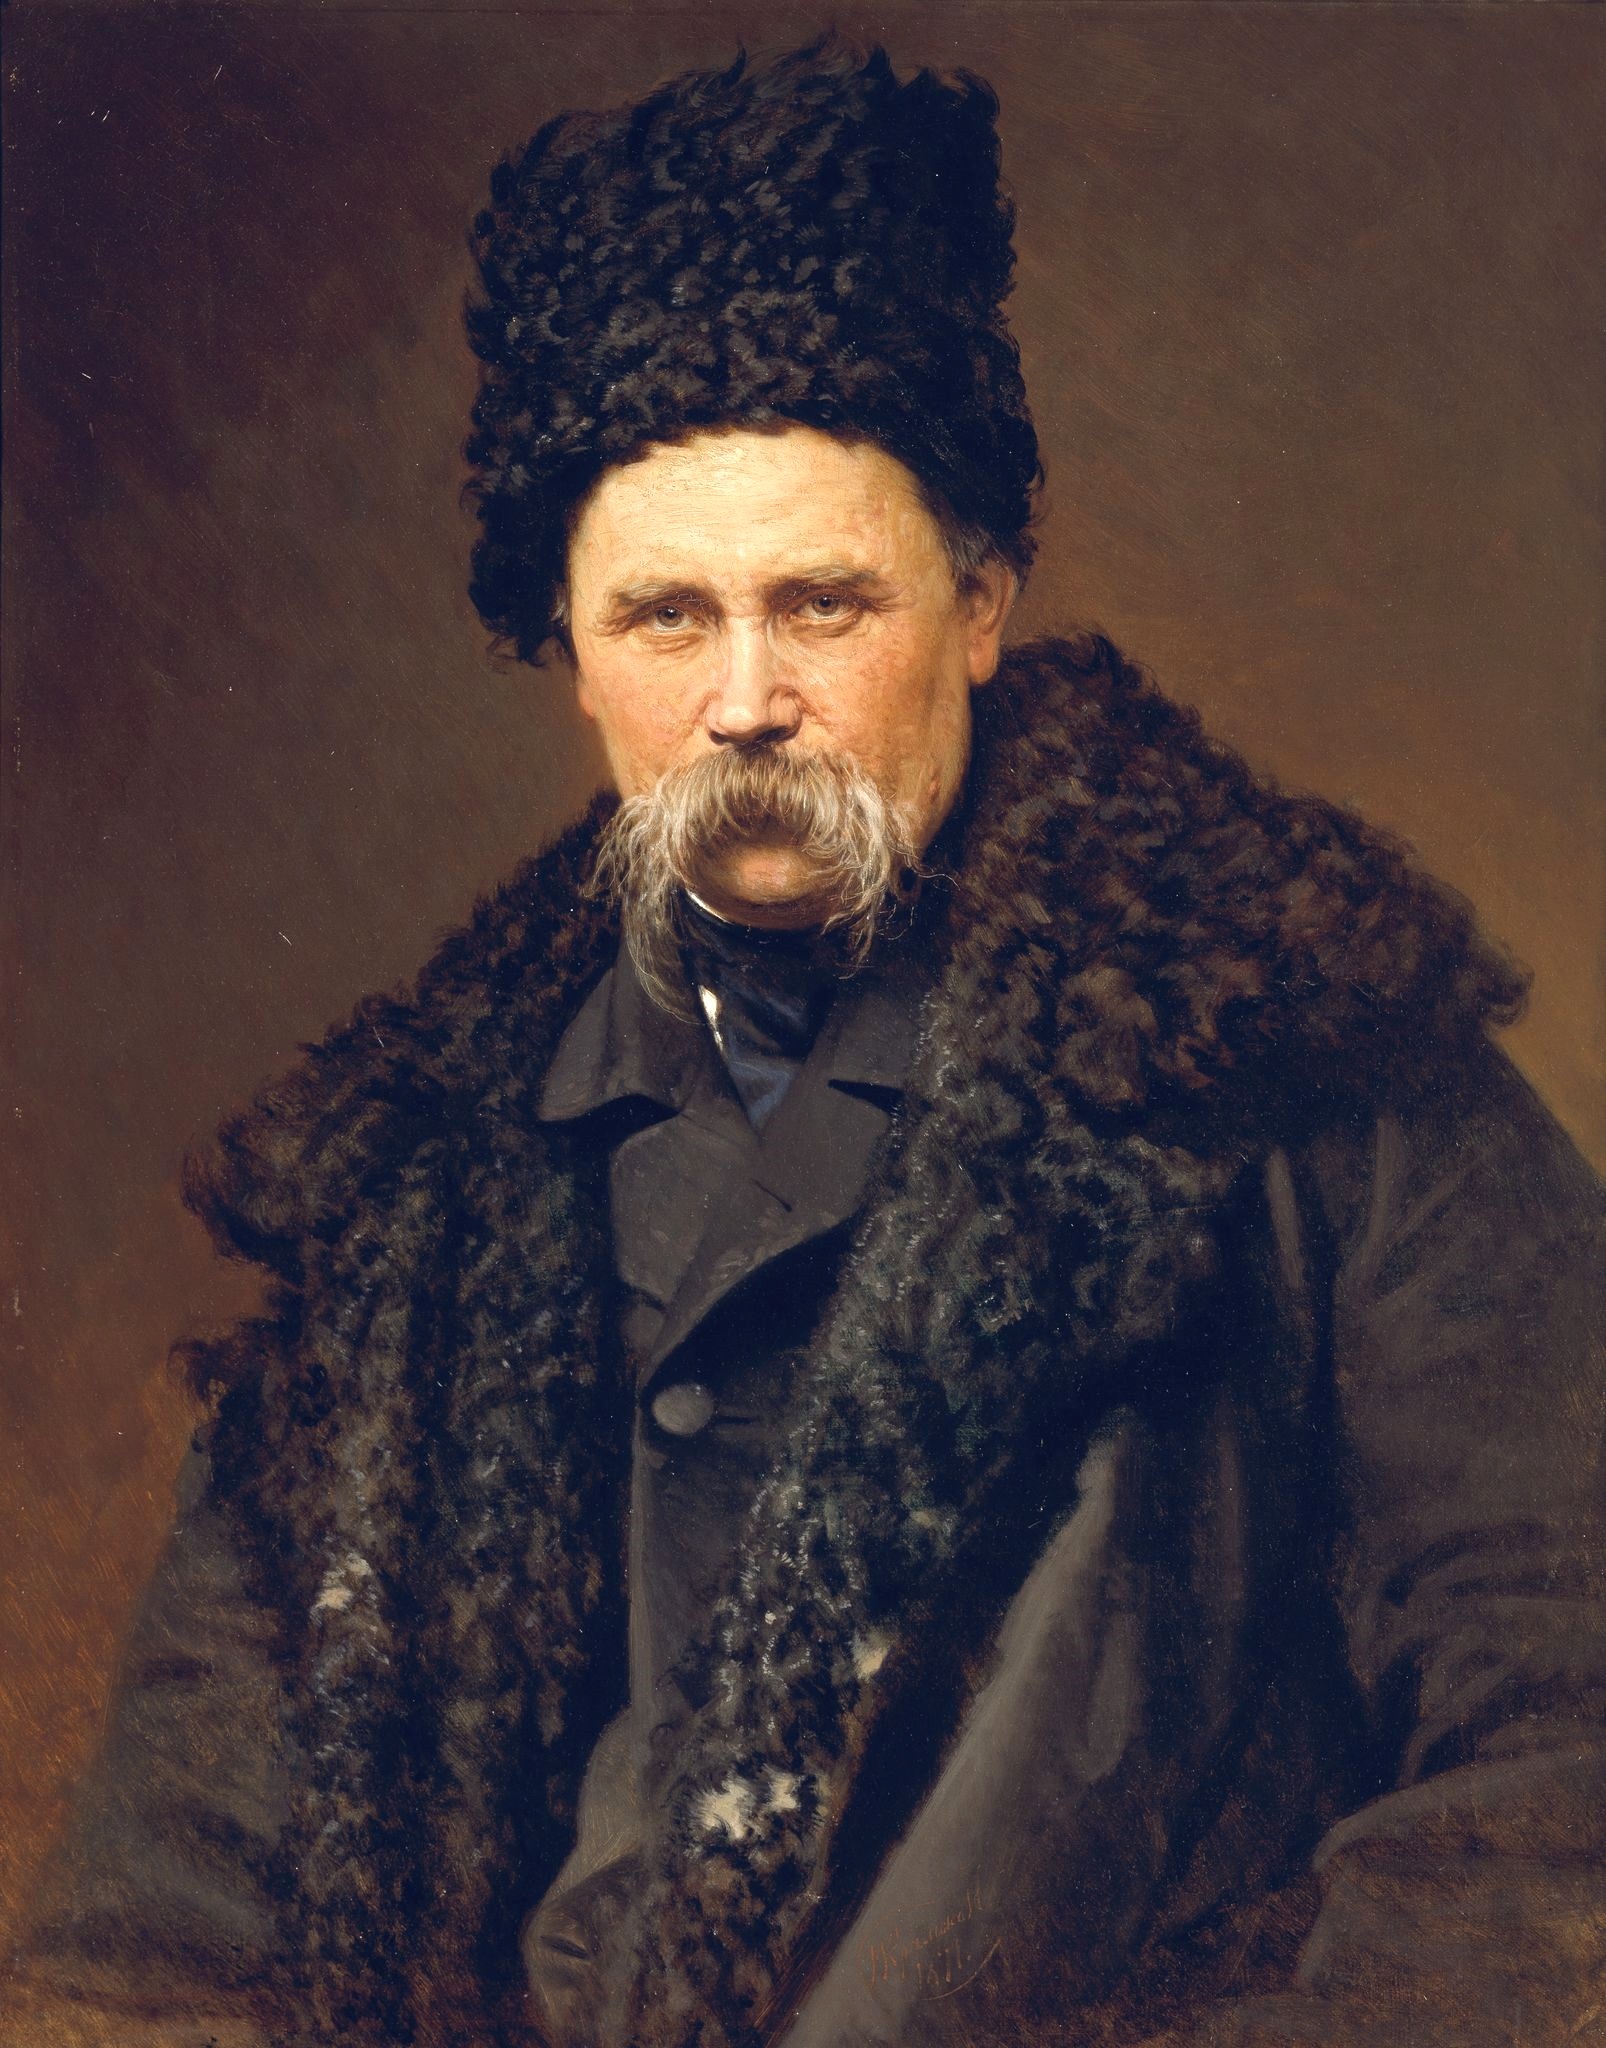 Shevchenko by Ivan Kramskoi upon his return from exile, 1871.